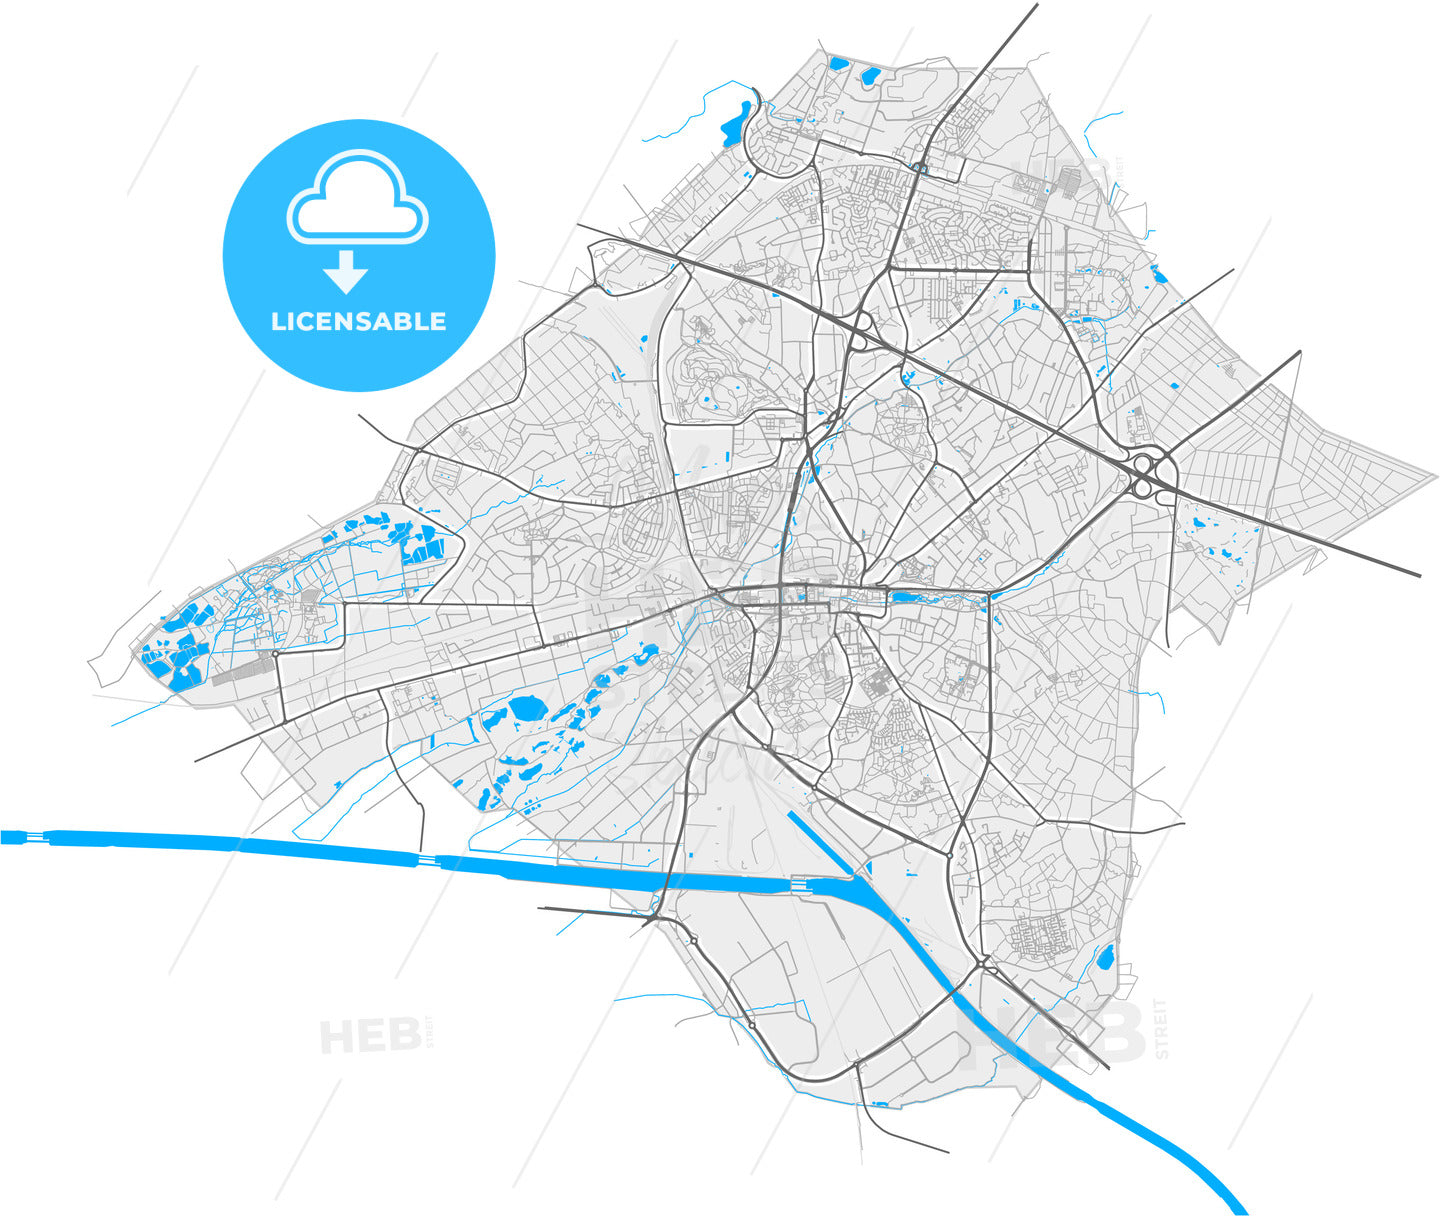 Genk, Limburg, Belgium, high quality vector map